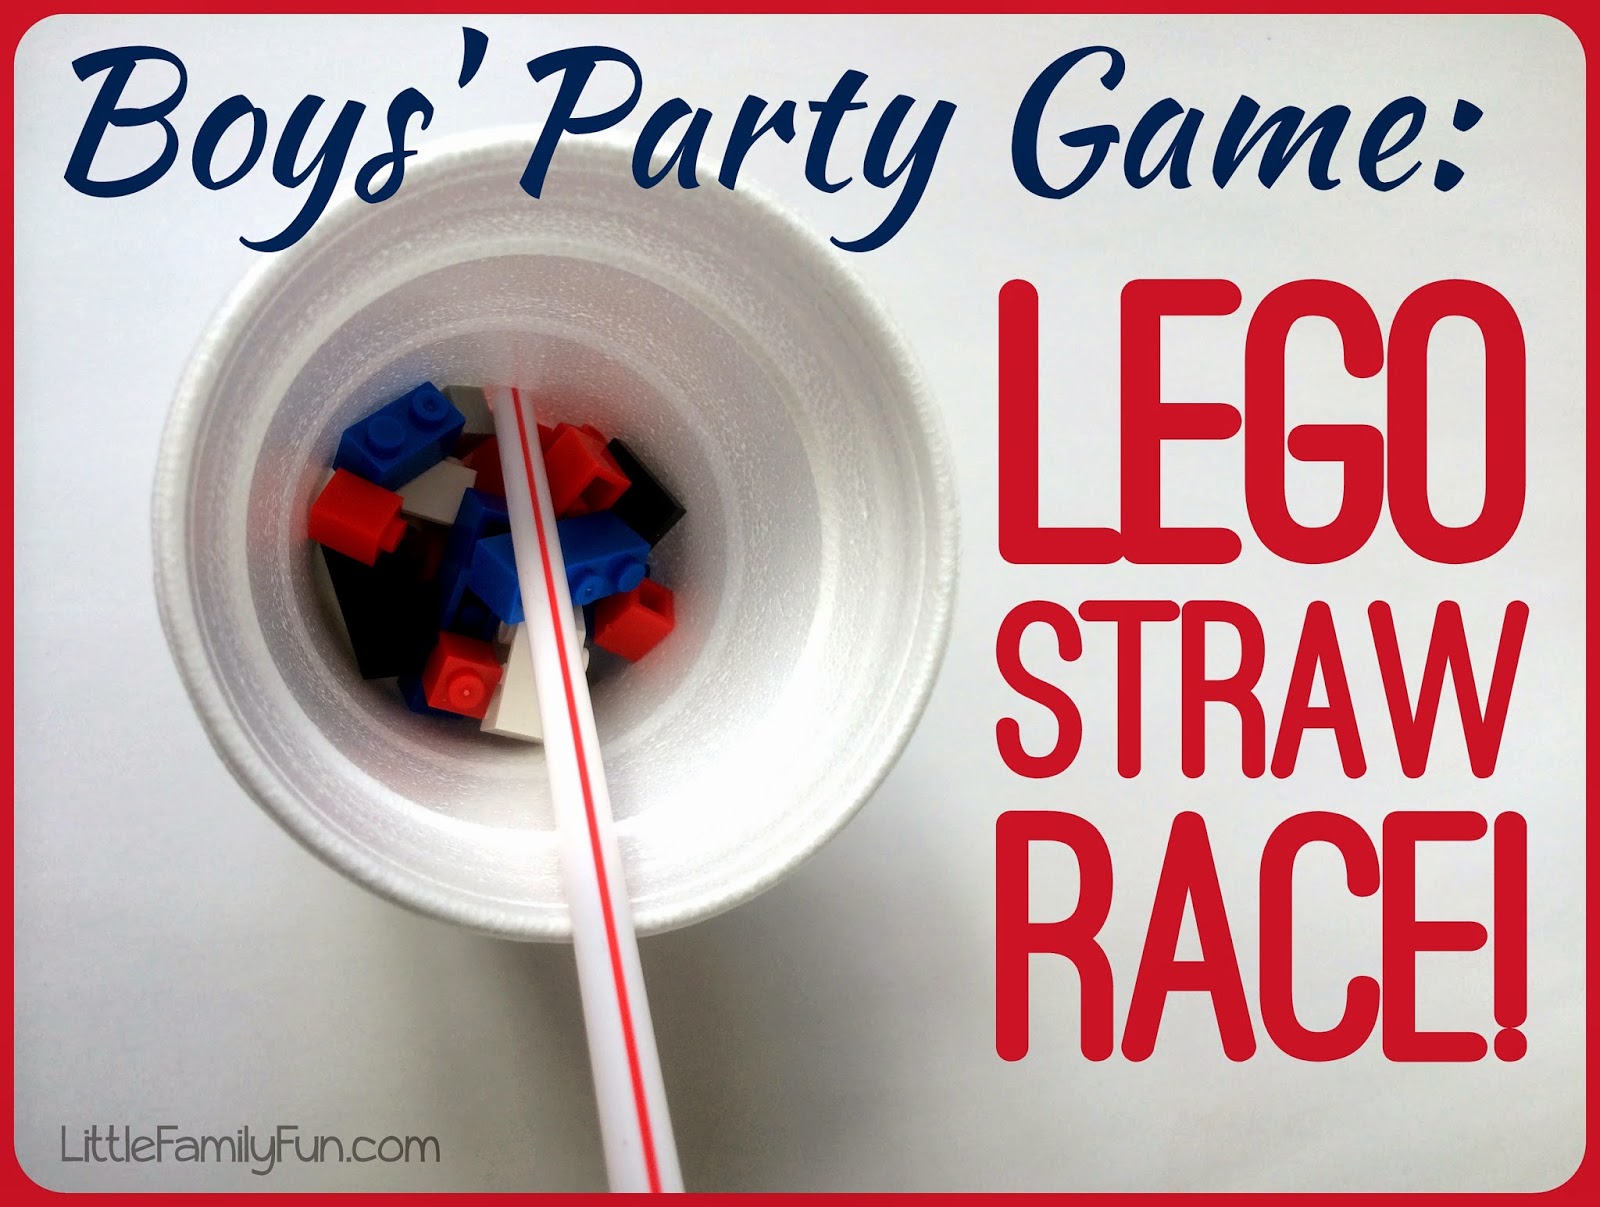 http://www.littlefamilyfun.com/2014/03/lego-straw-race.html